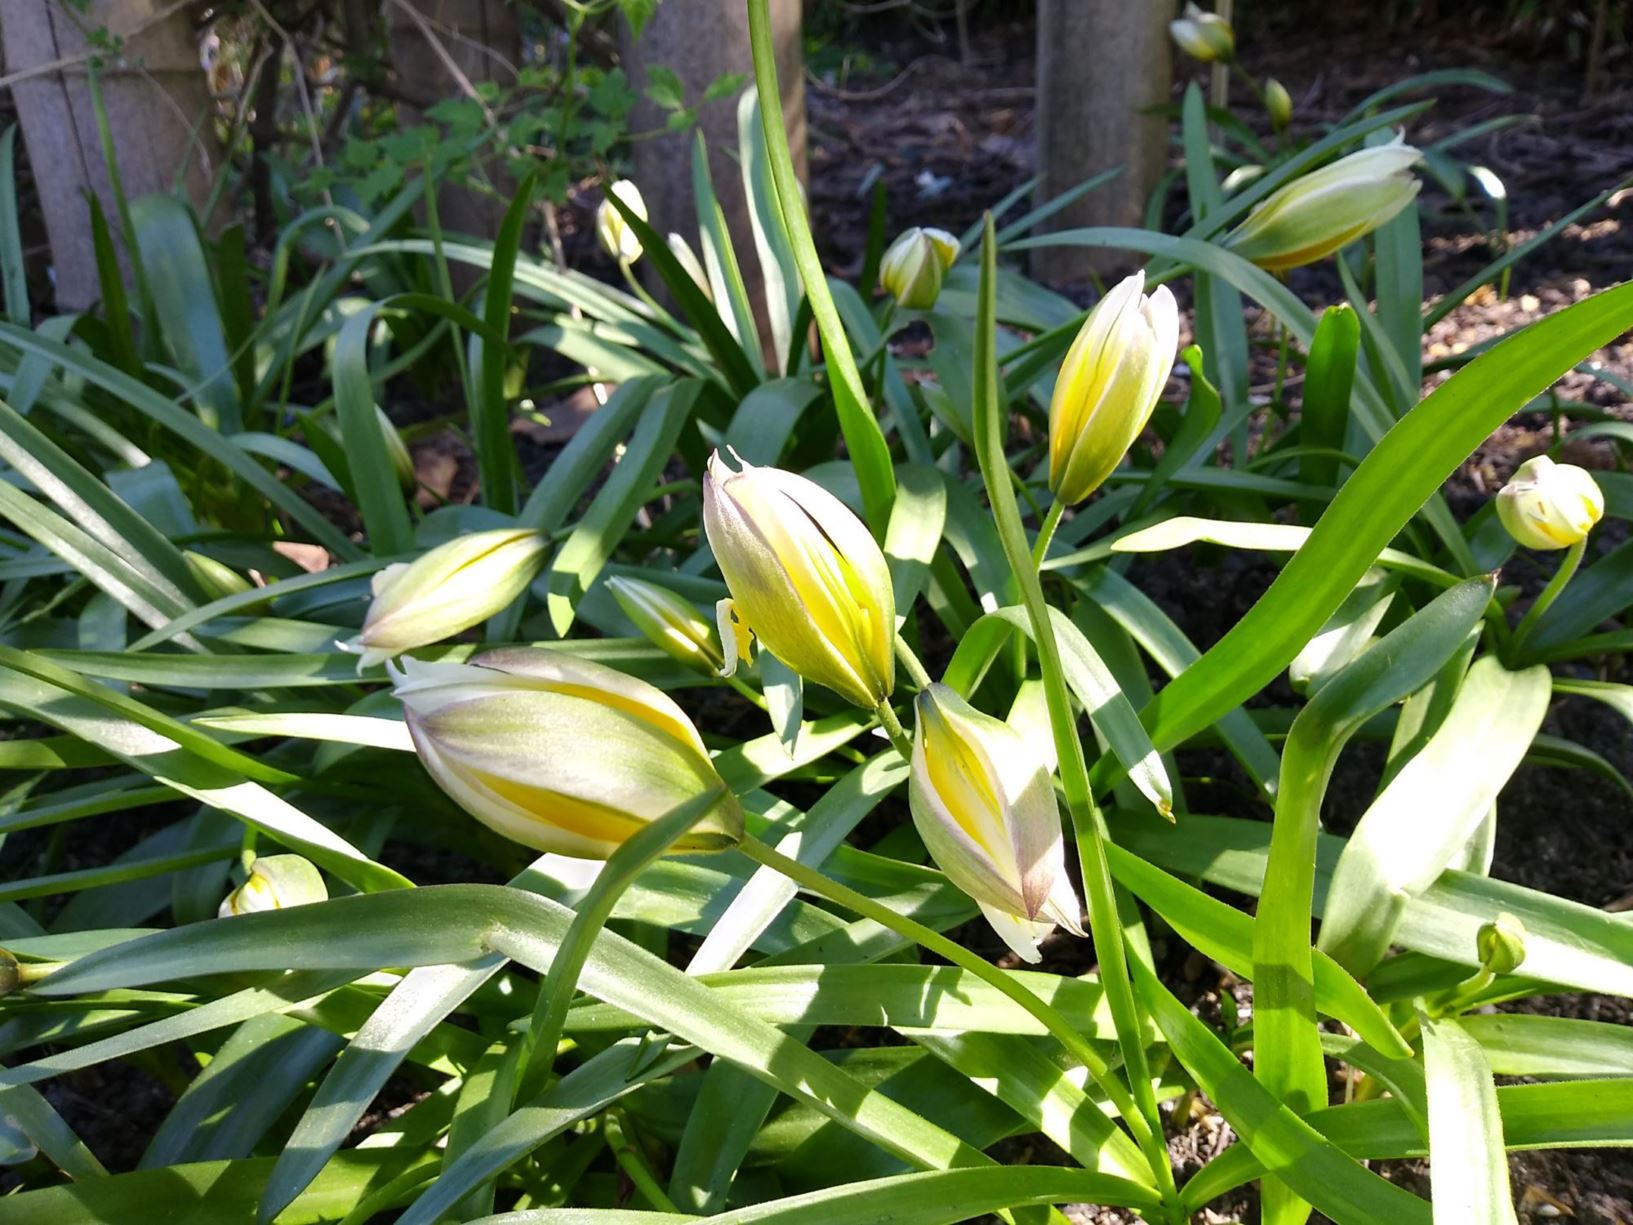 Tulipa tarda - Late tulip